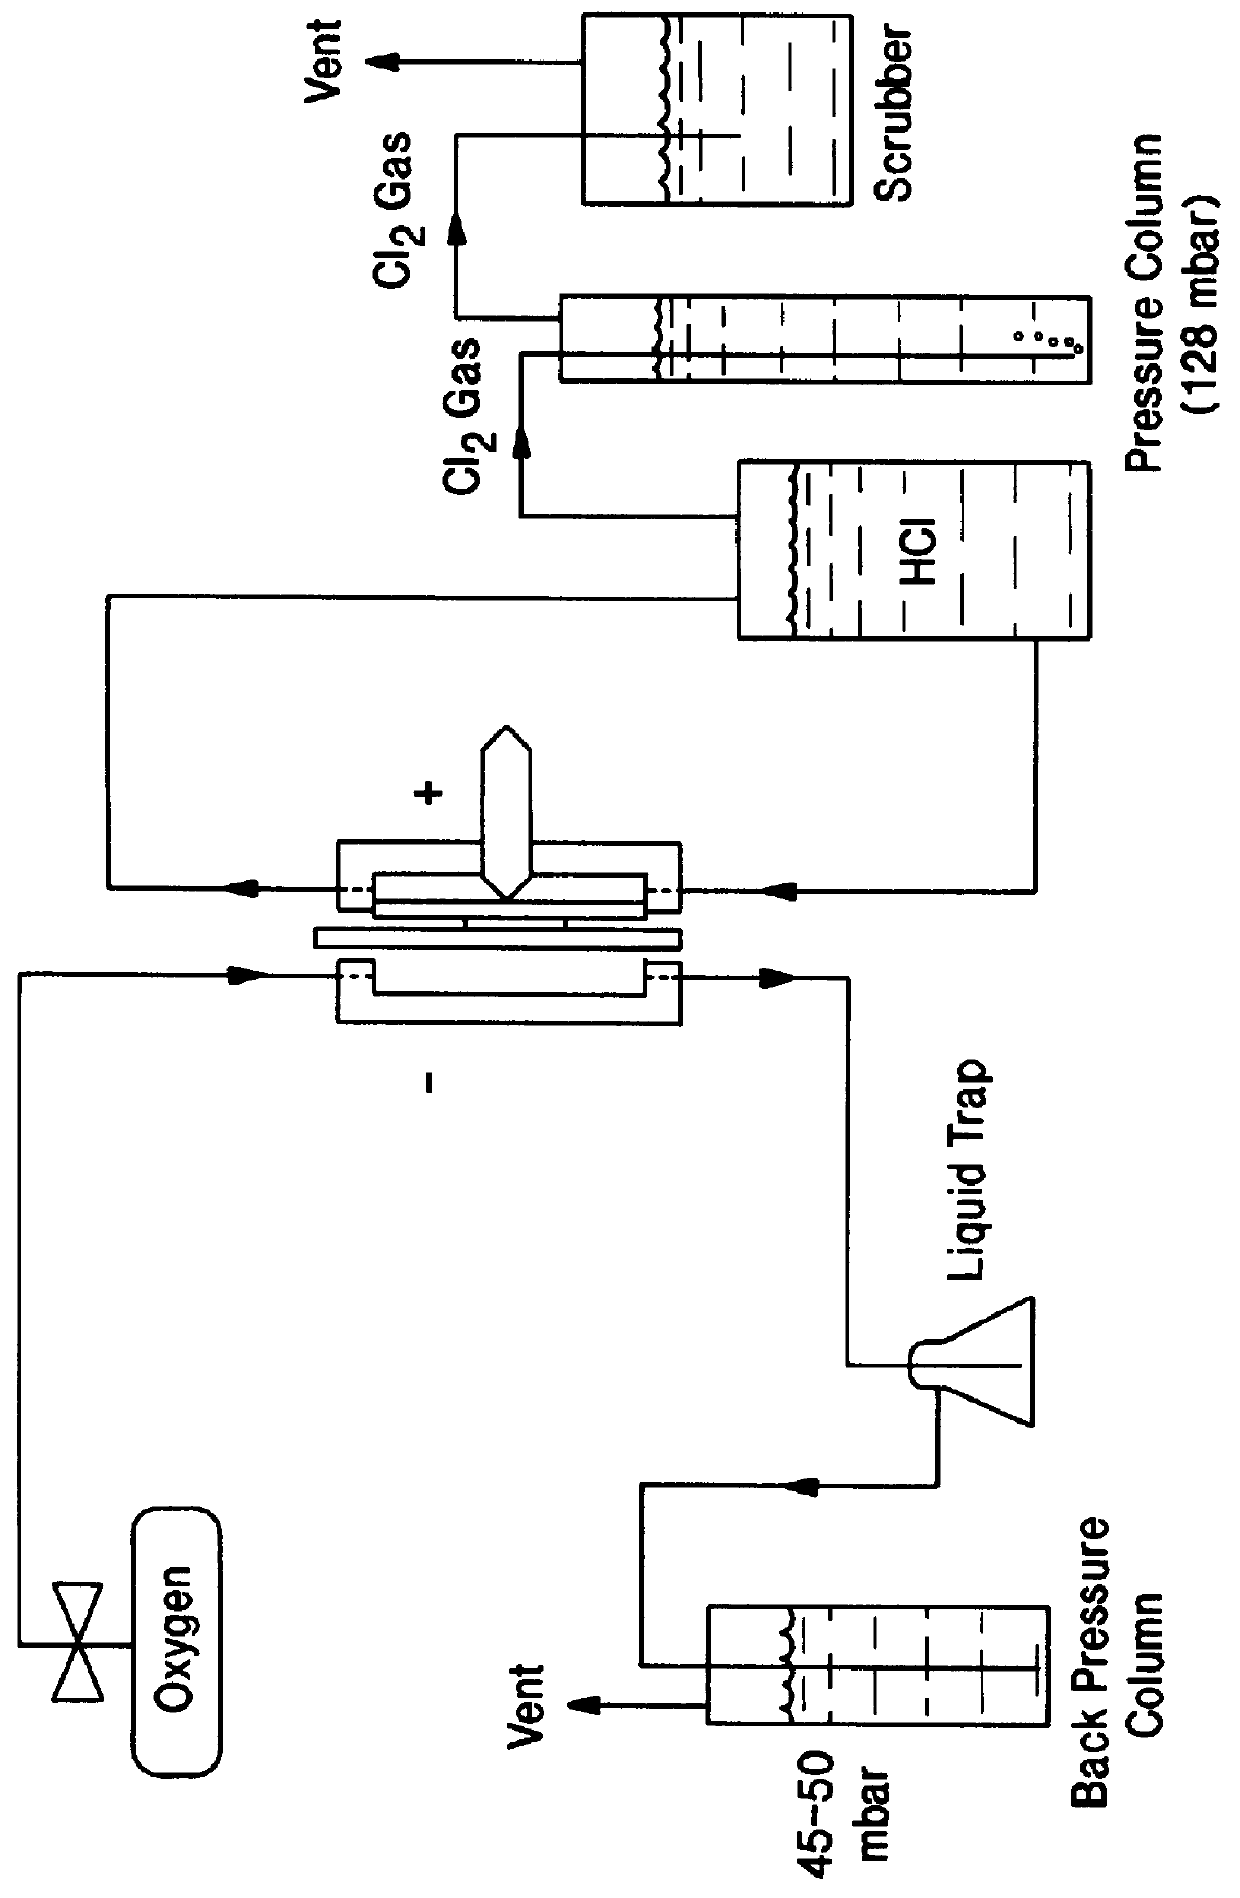 Rhodium electrocatalyst and method of preparation